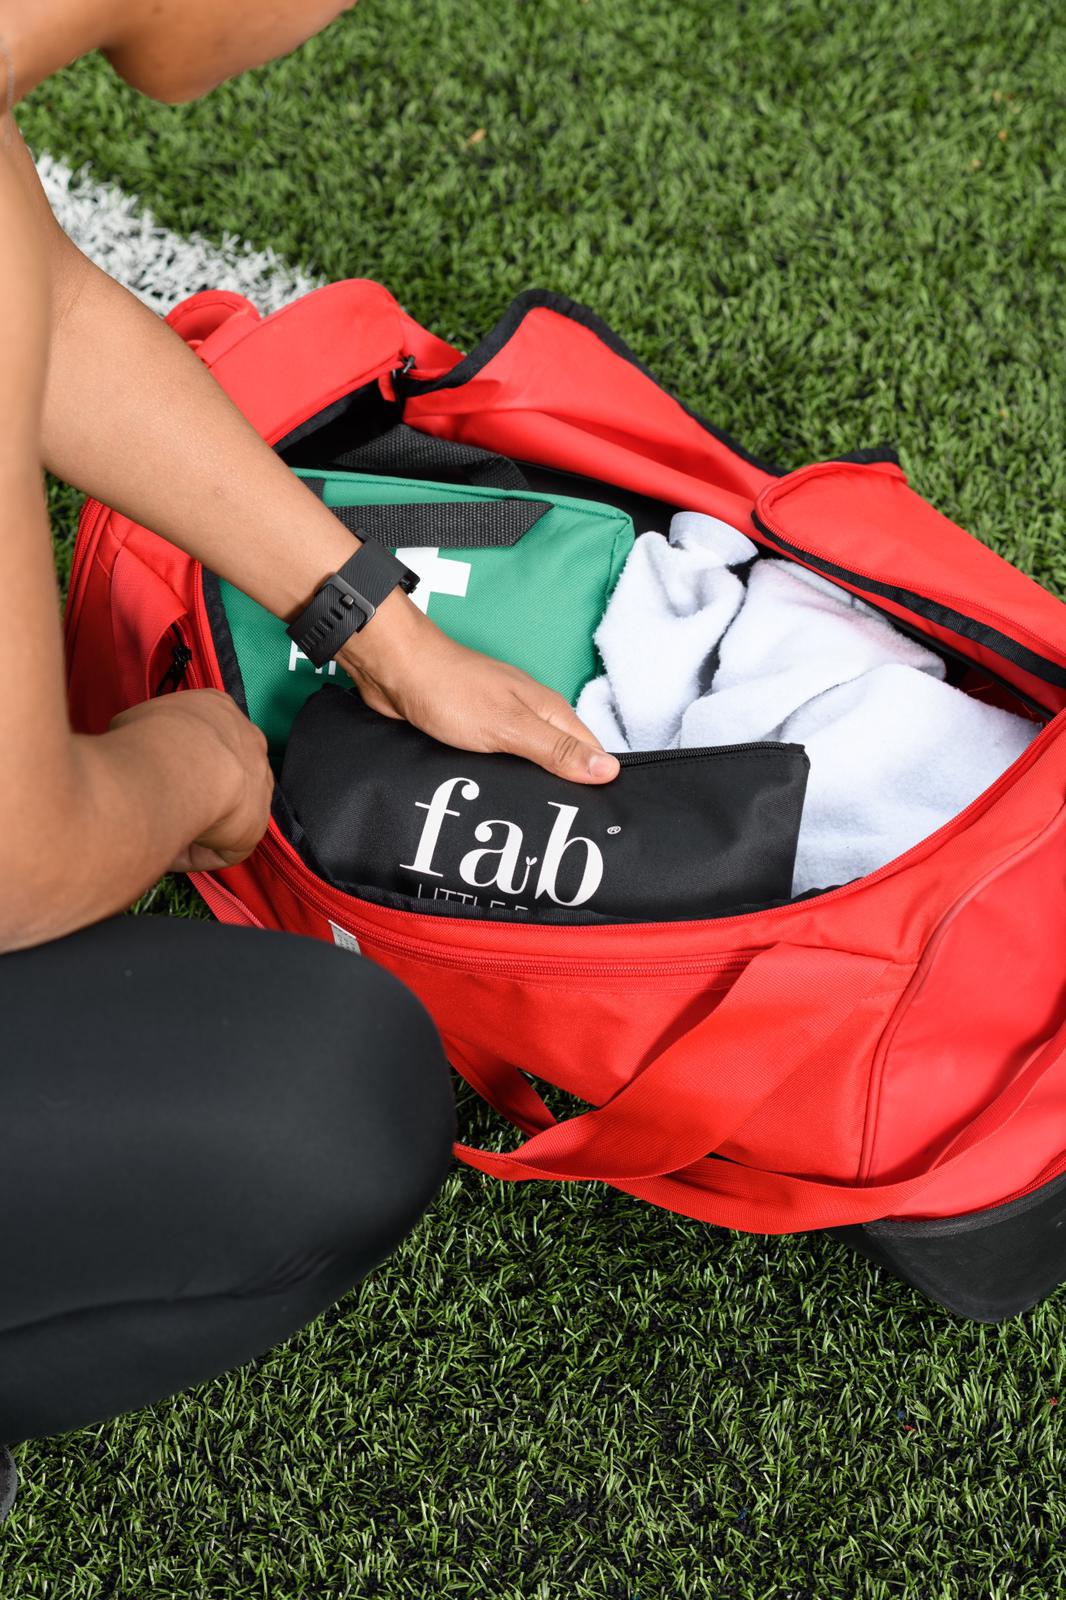 Fab Little Bag - Coaches Pack